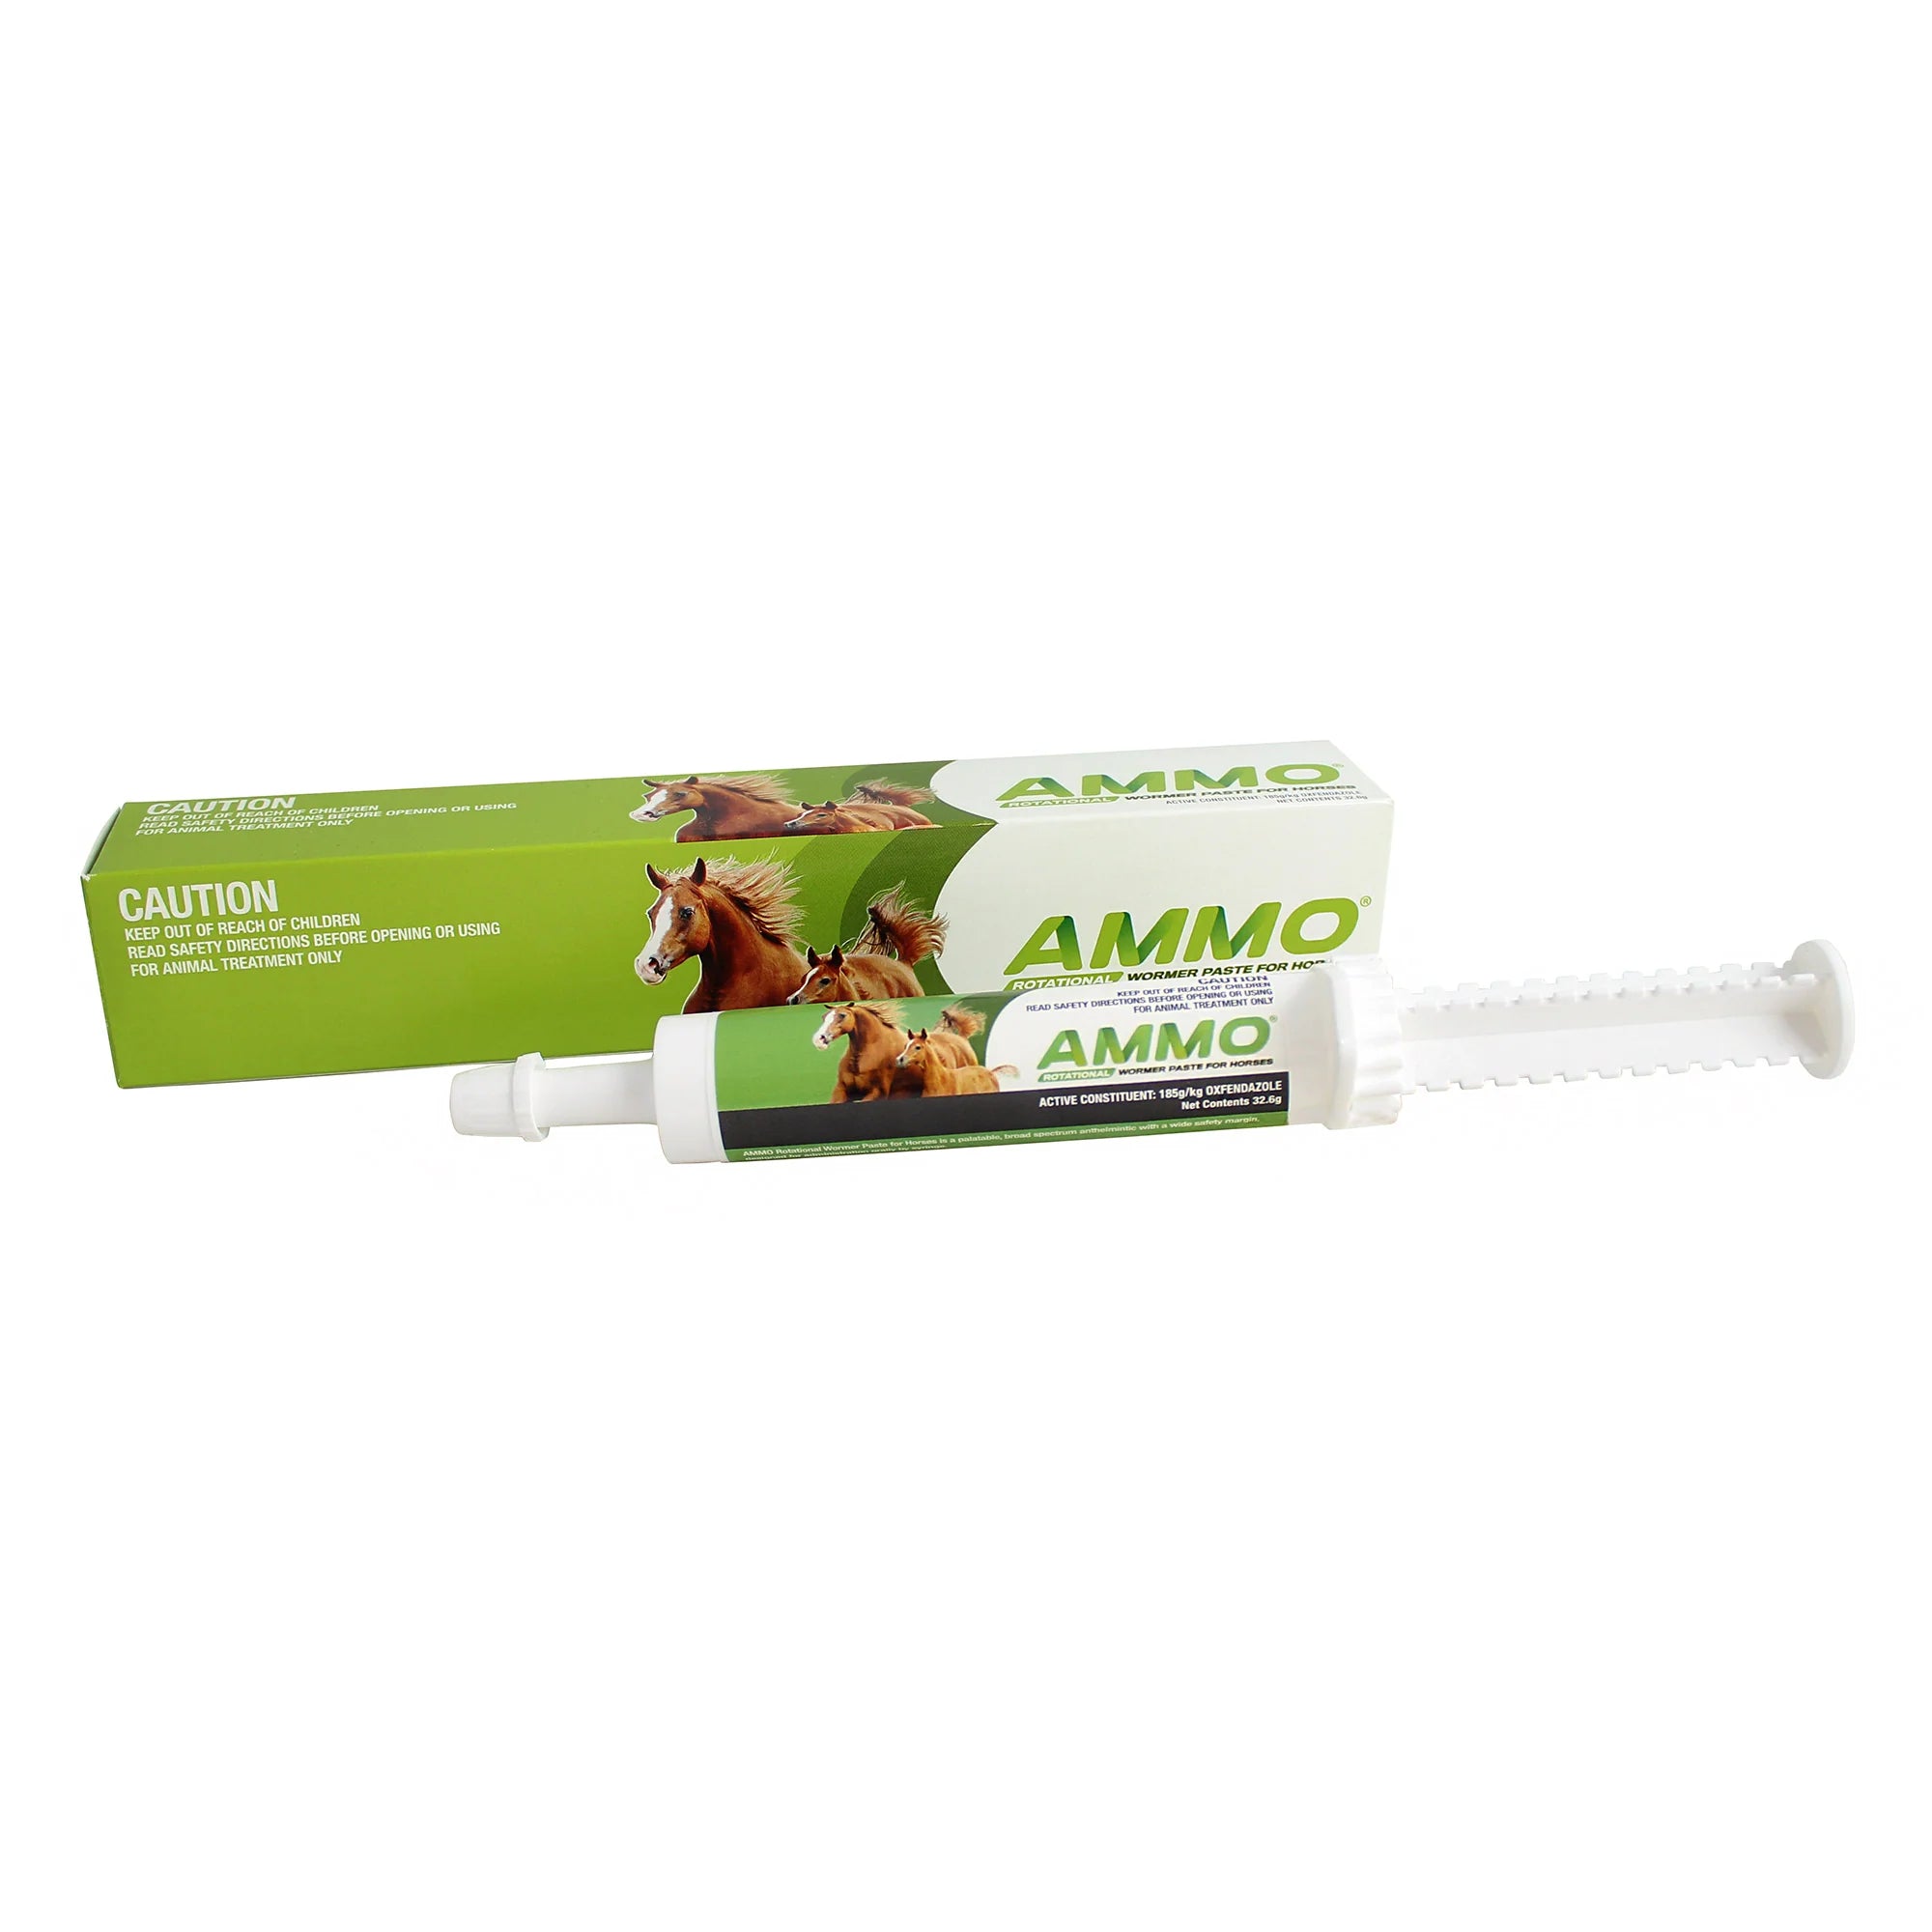 ammo-wormer-green-box-and-tube-4web.webp